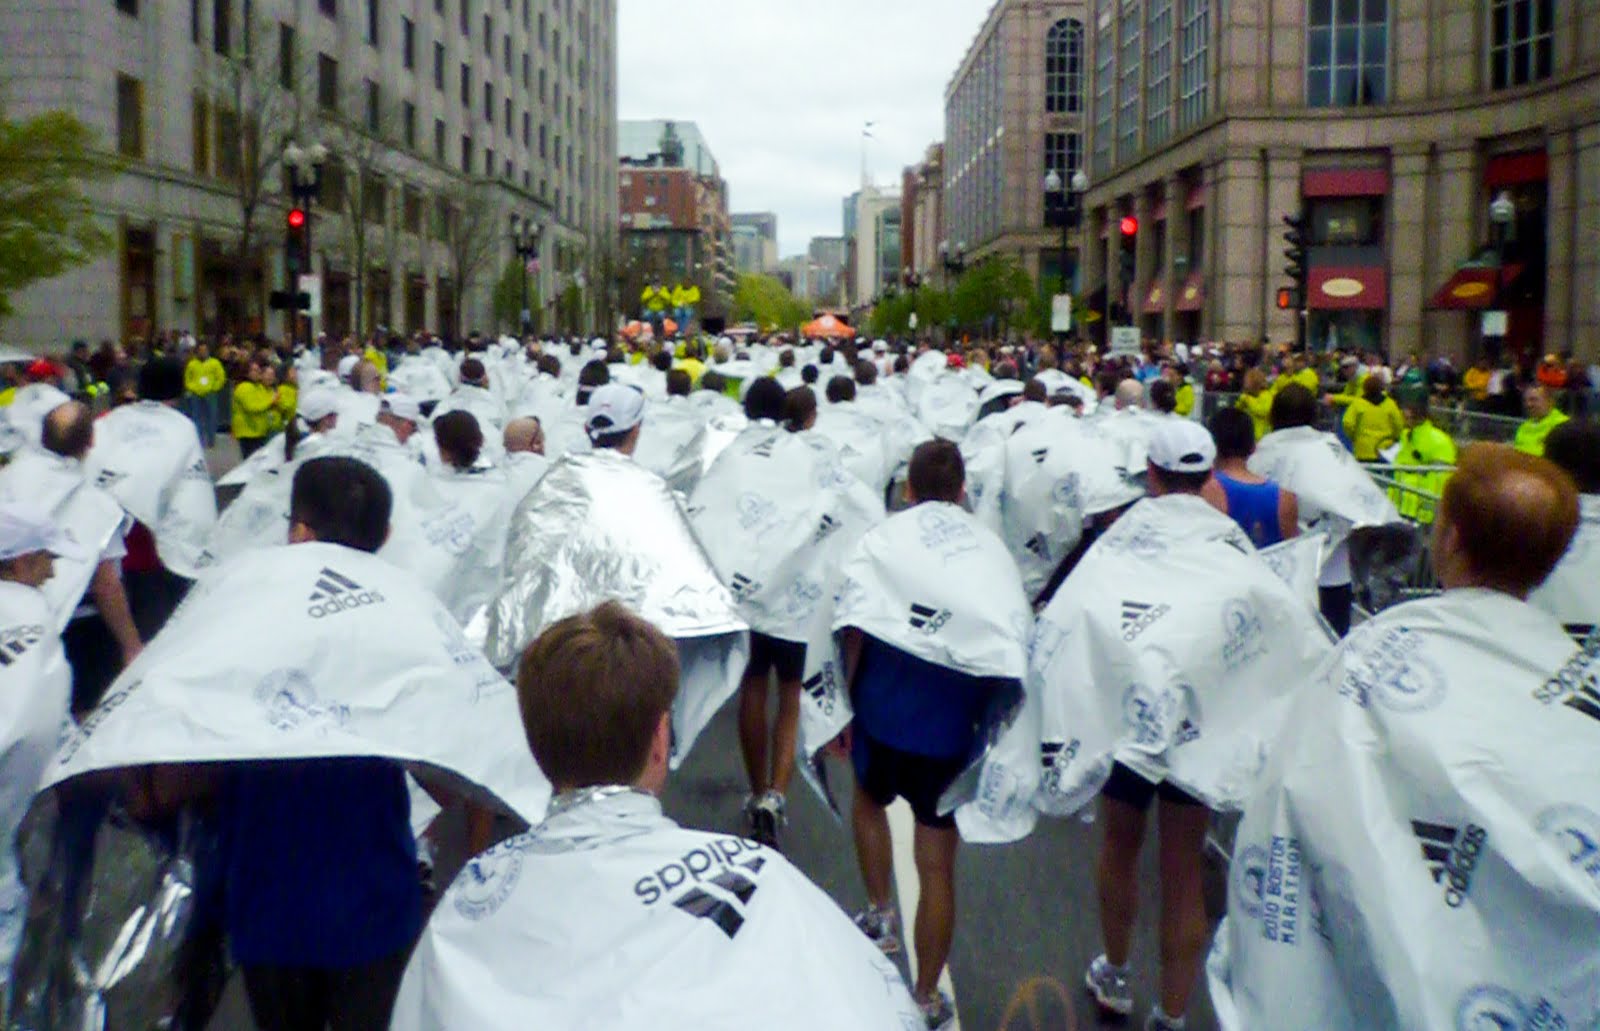 A Trail Runner's Blog: The Beautiful 2010 Boston Marathon